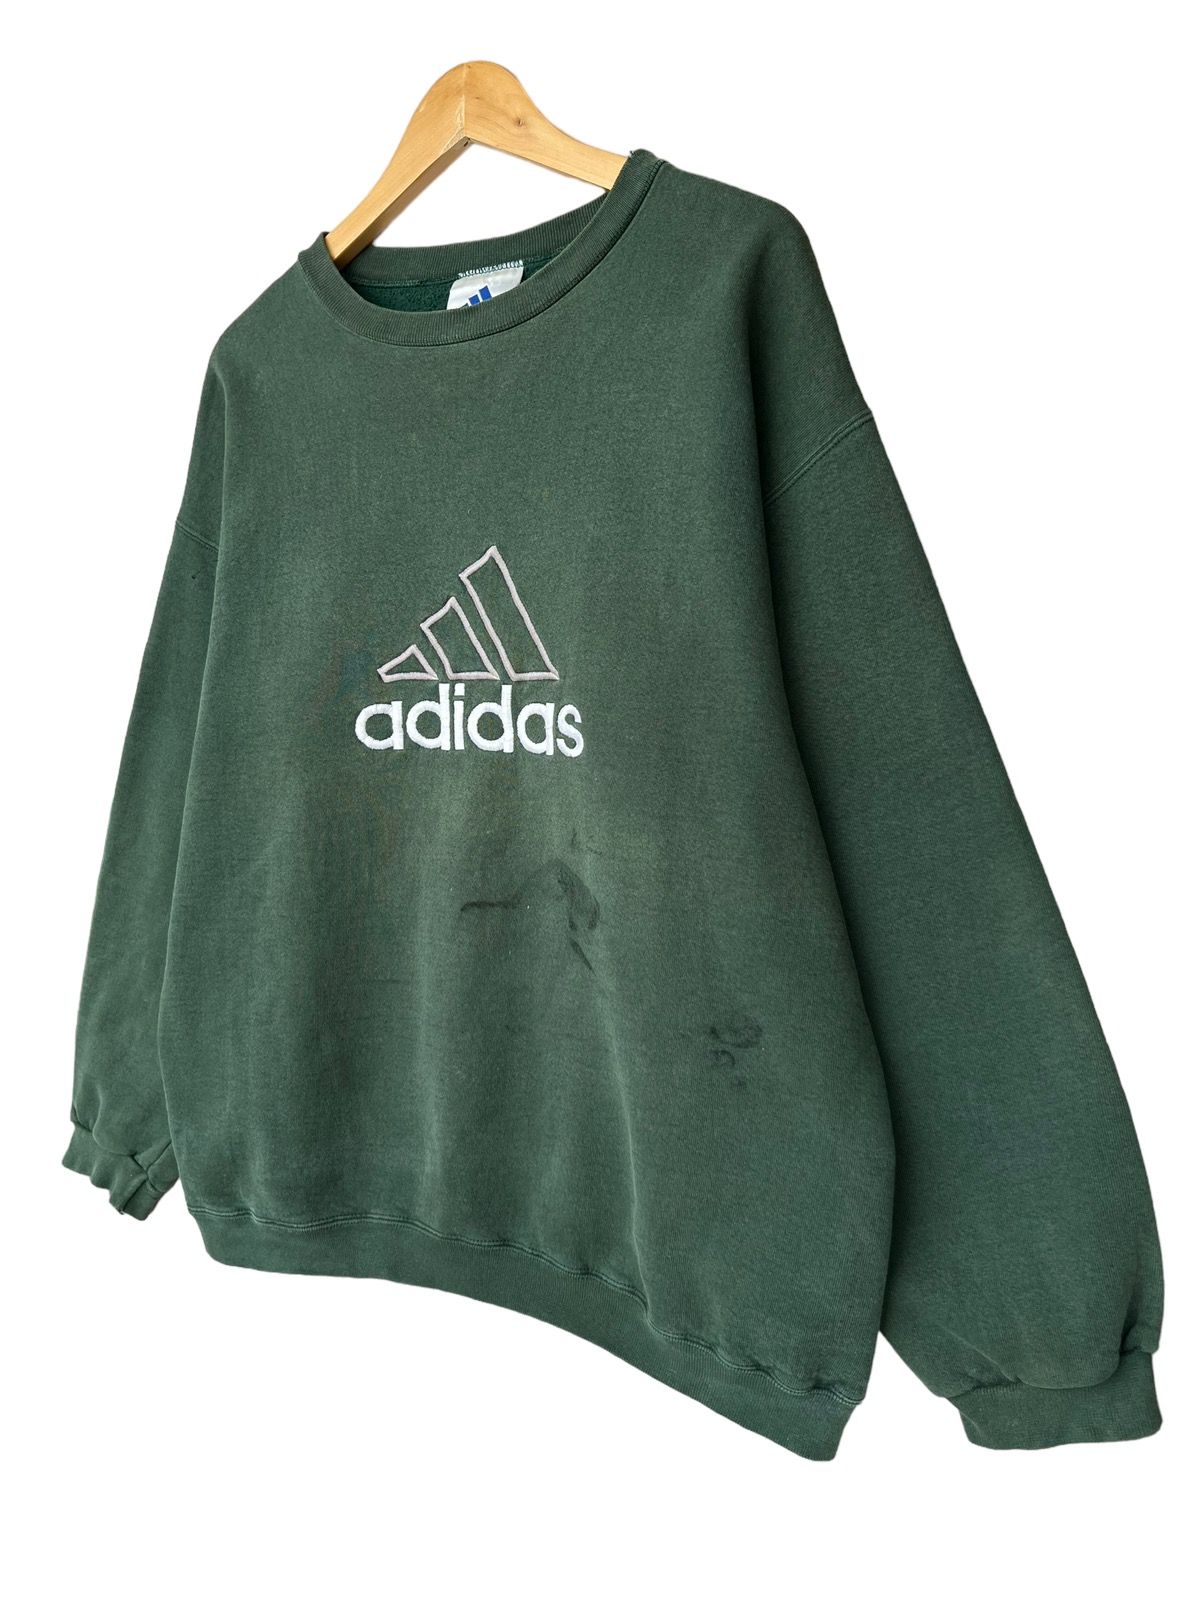 Vintage 90s Adidas Trefoil Biglogo Green Baggy Sweatshirt - 3